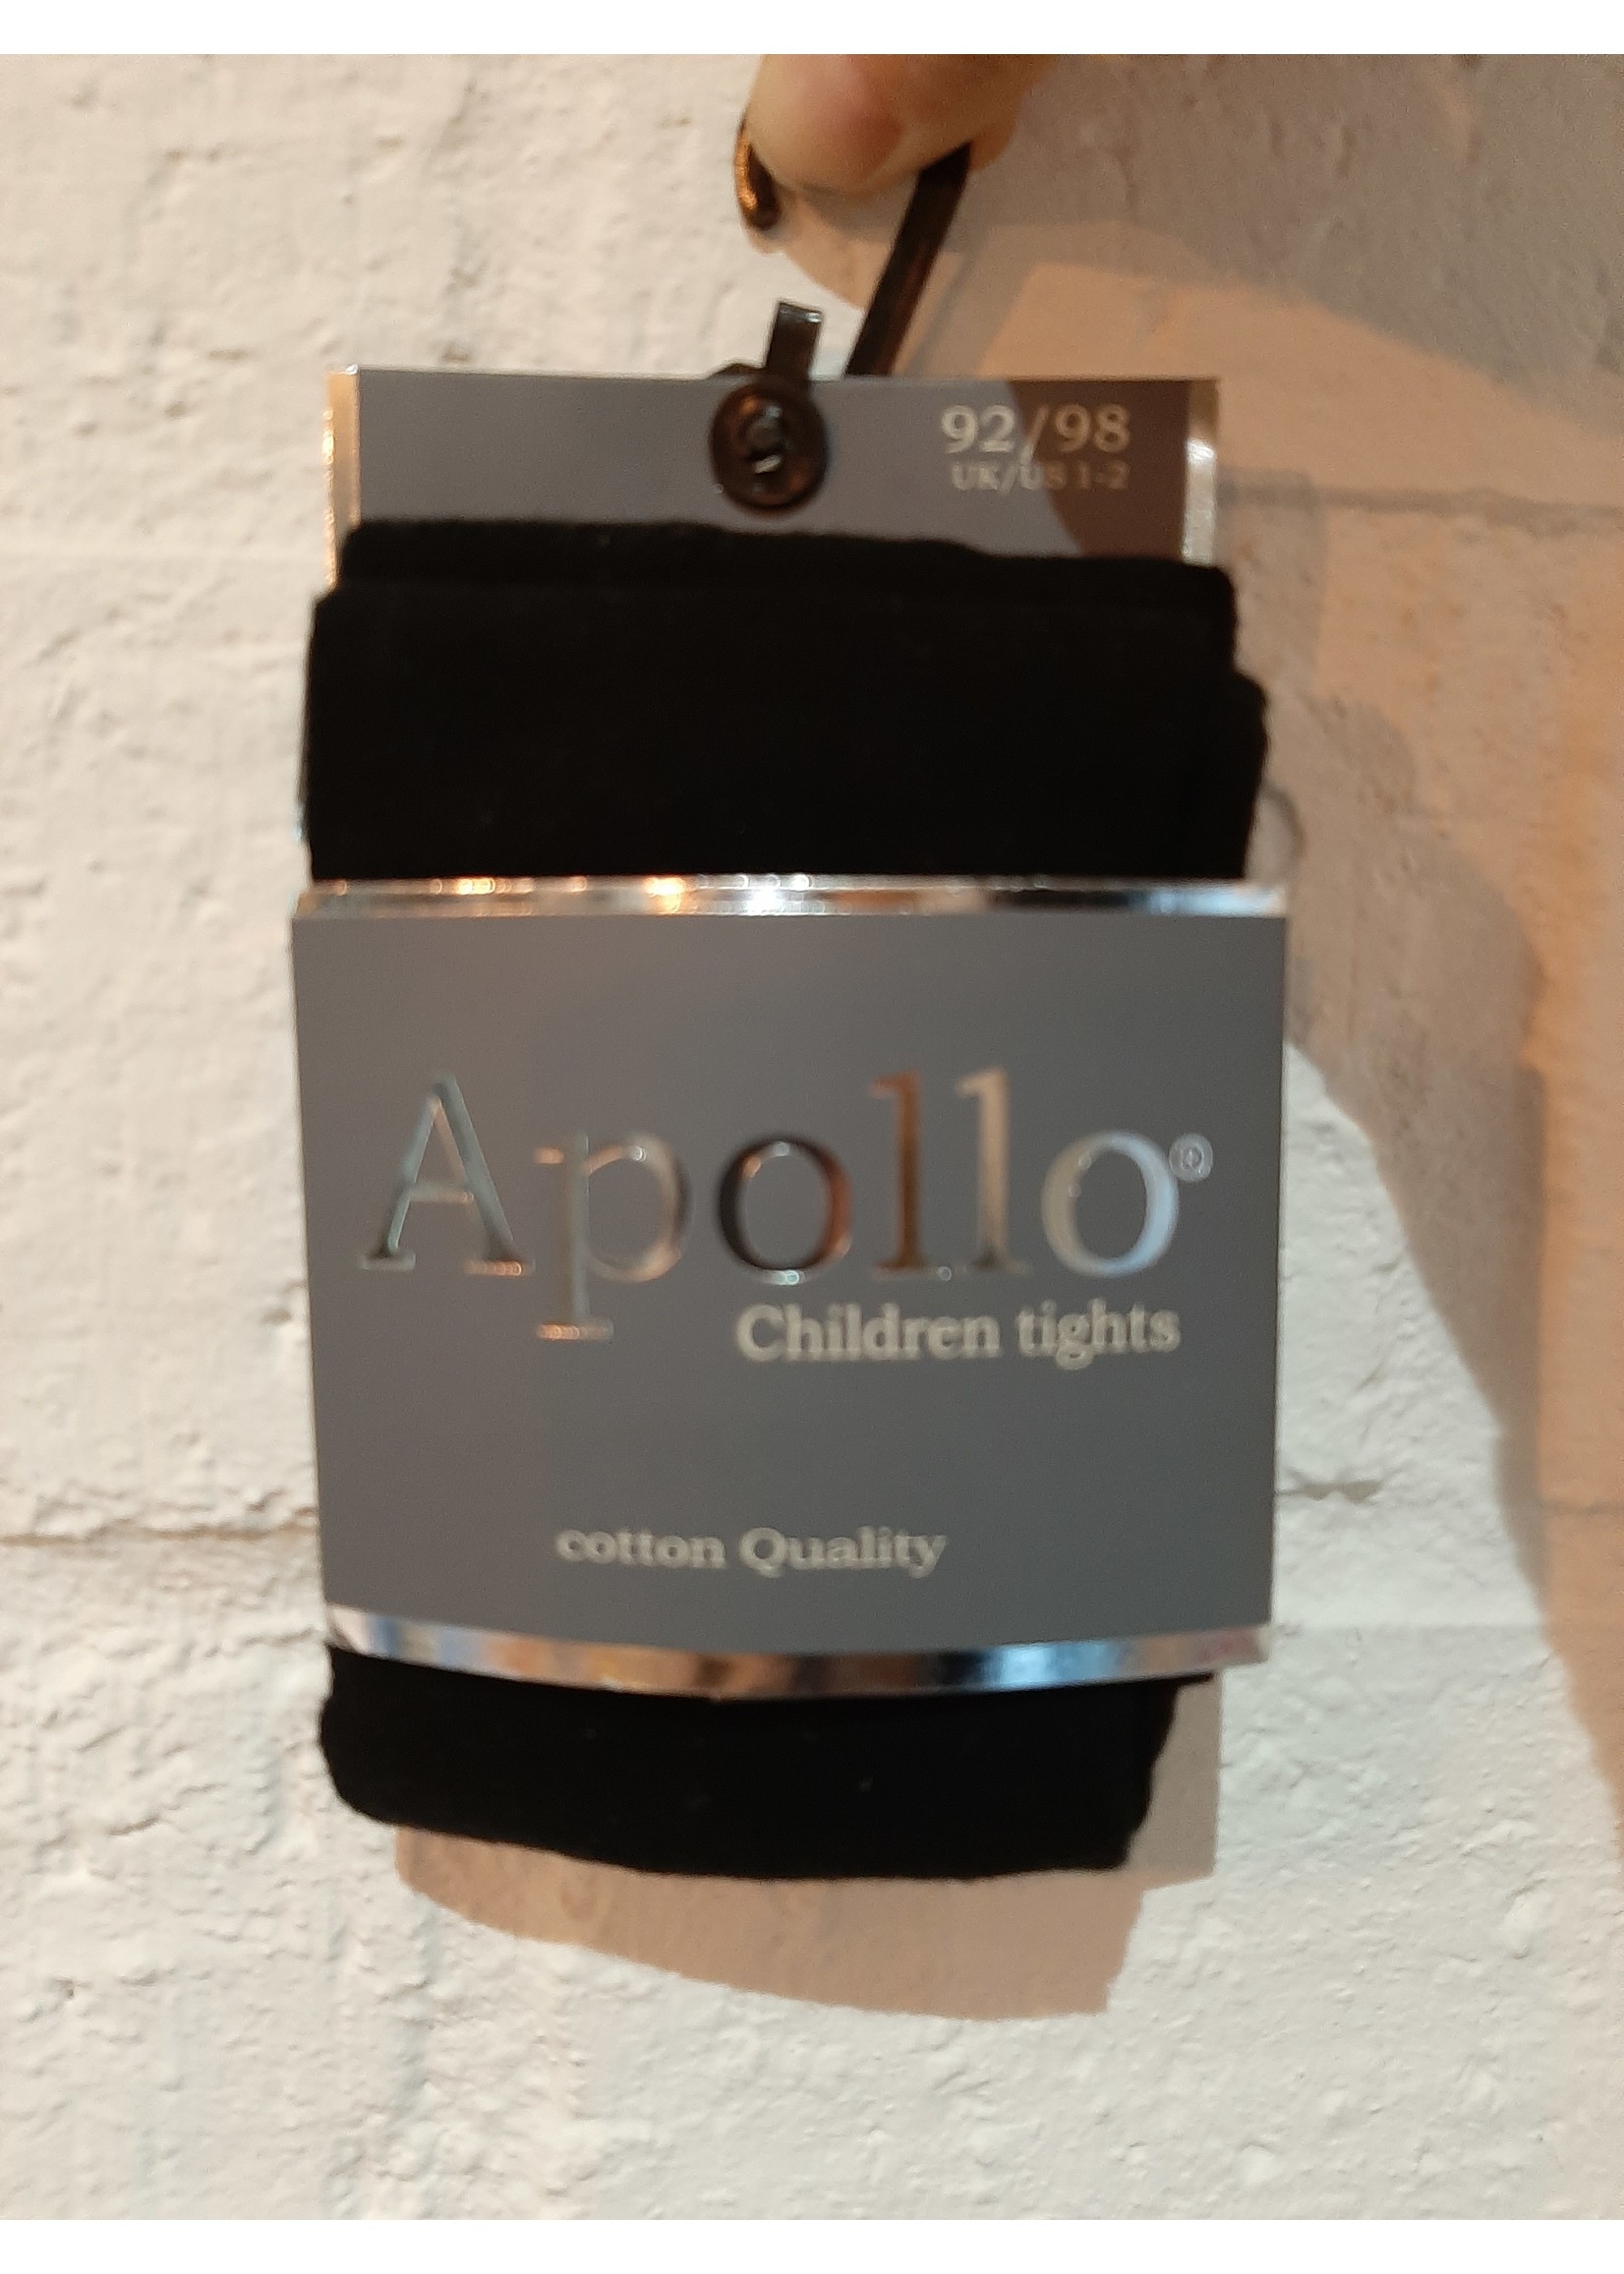 Apollo Maillot Apollo